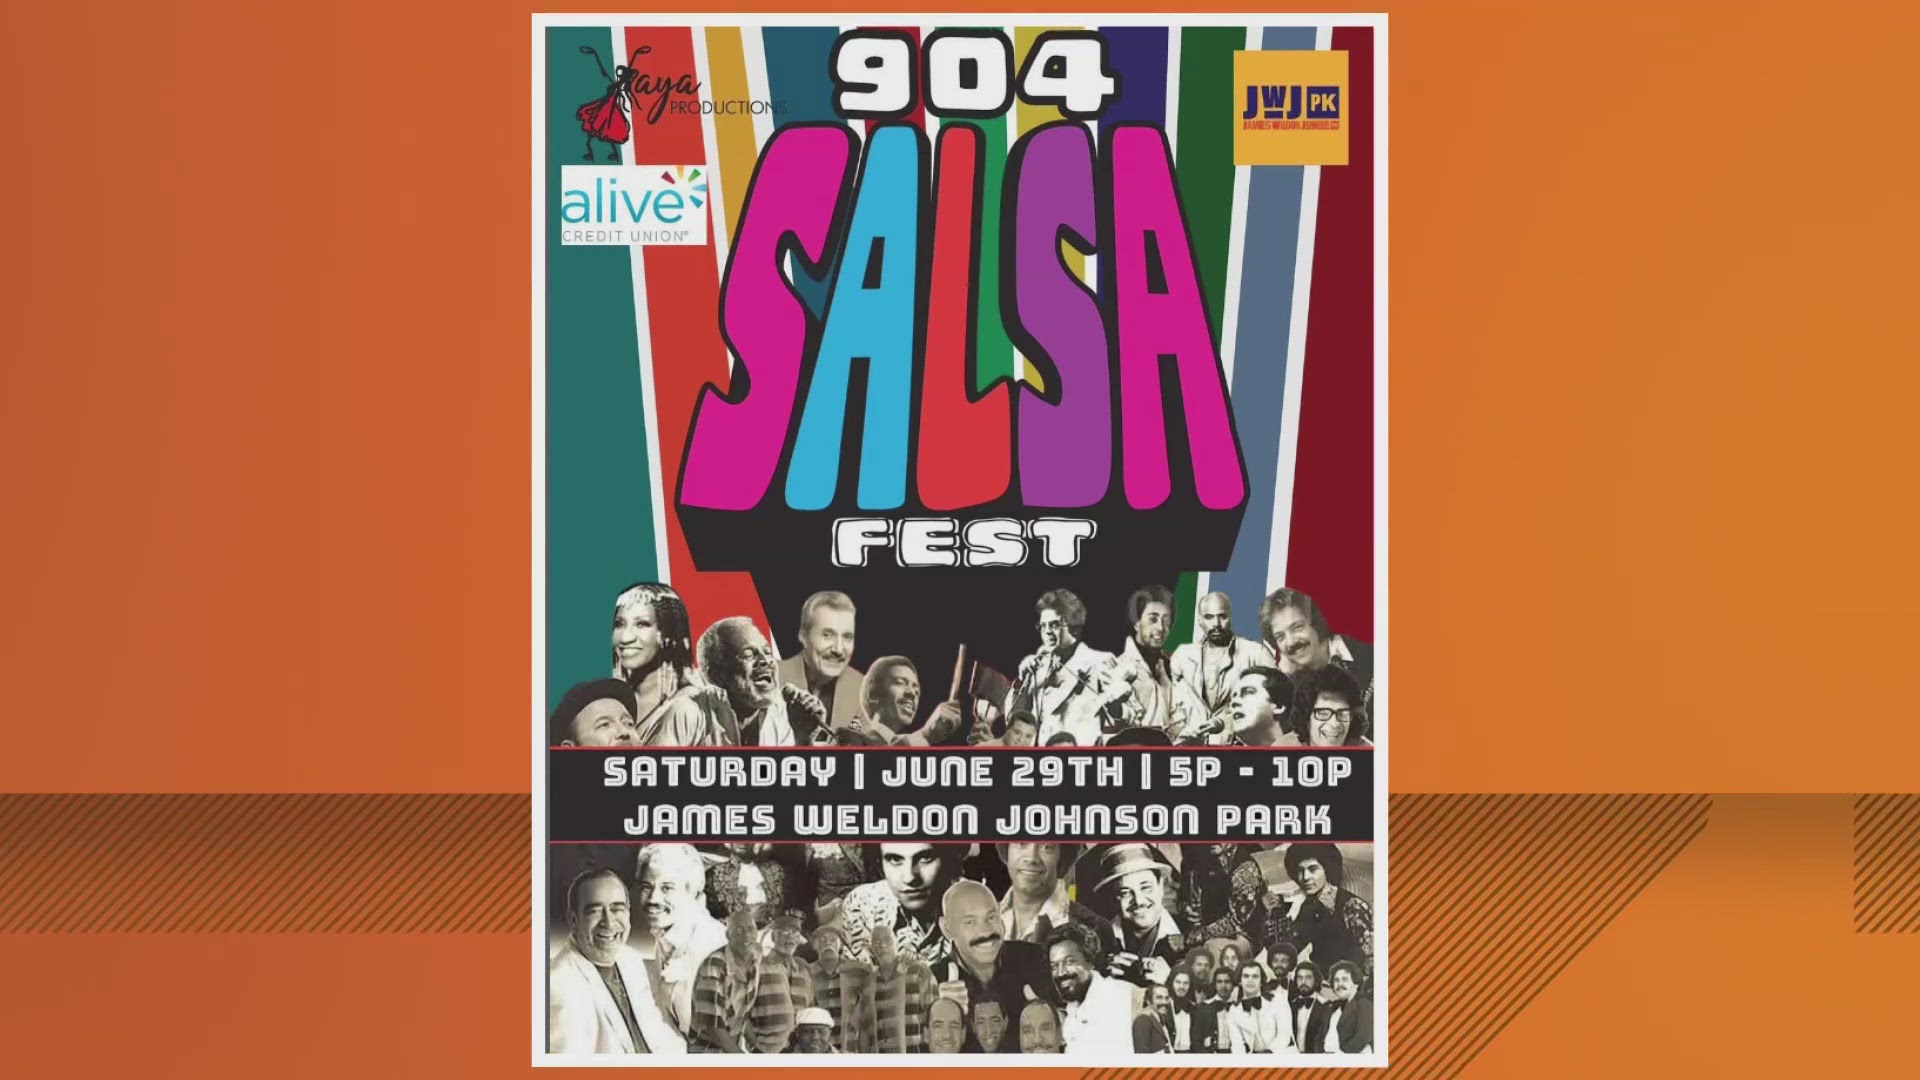 Events include a '904 Salsa Fest' at James Weldon Johnson Park, 'Artpark Fun Day' on Hubbard Street and a Jumbo Shrimp game!